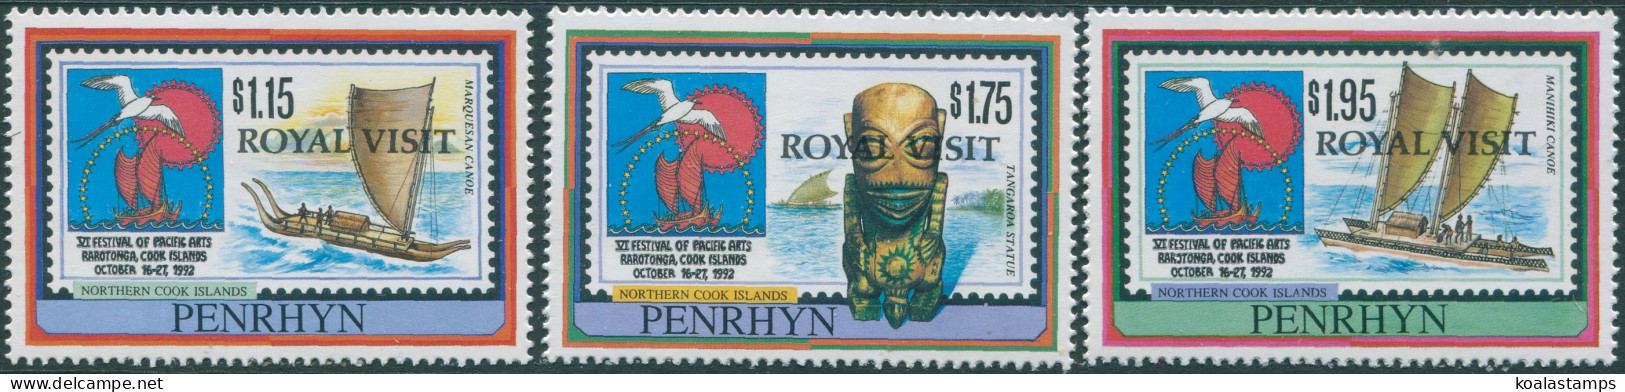 Cook Islands Penrhyn 1992 SG469-471 Royal Visit By Prince Edward Set MNH - Penrhyn